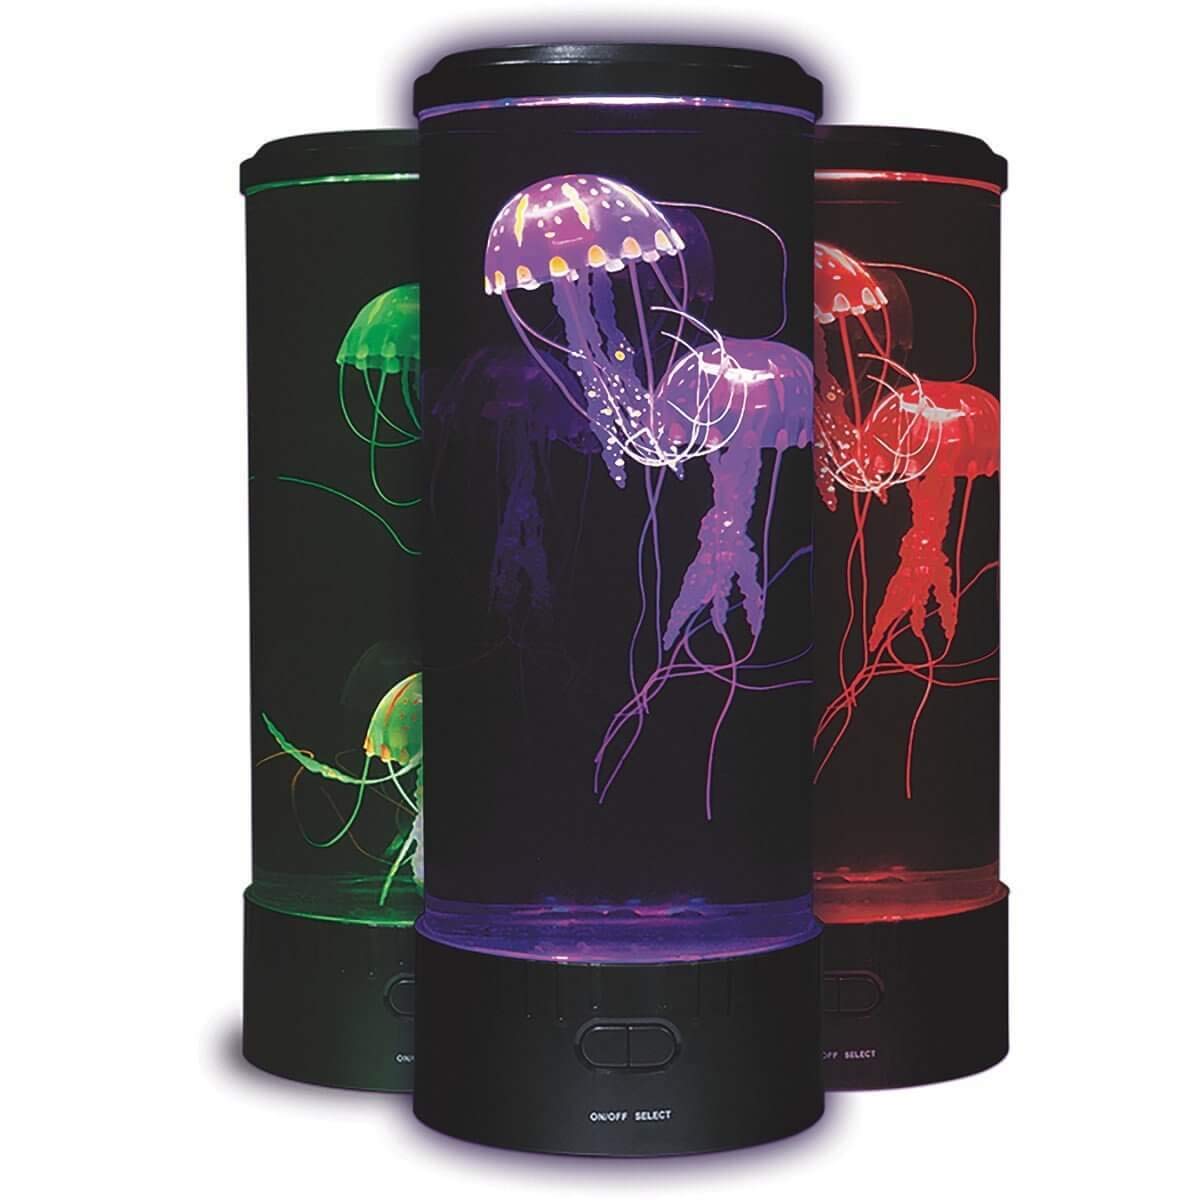 Magic Jellyfish Mood Light